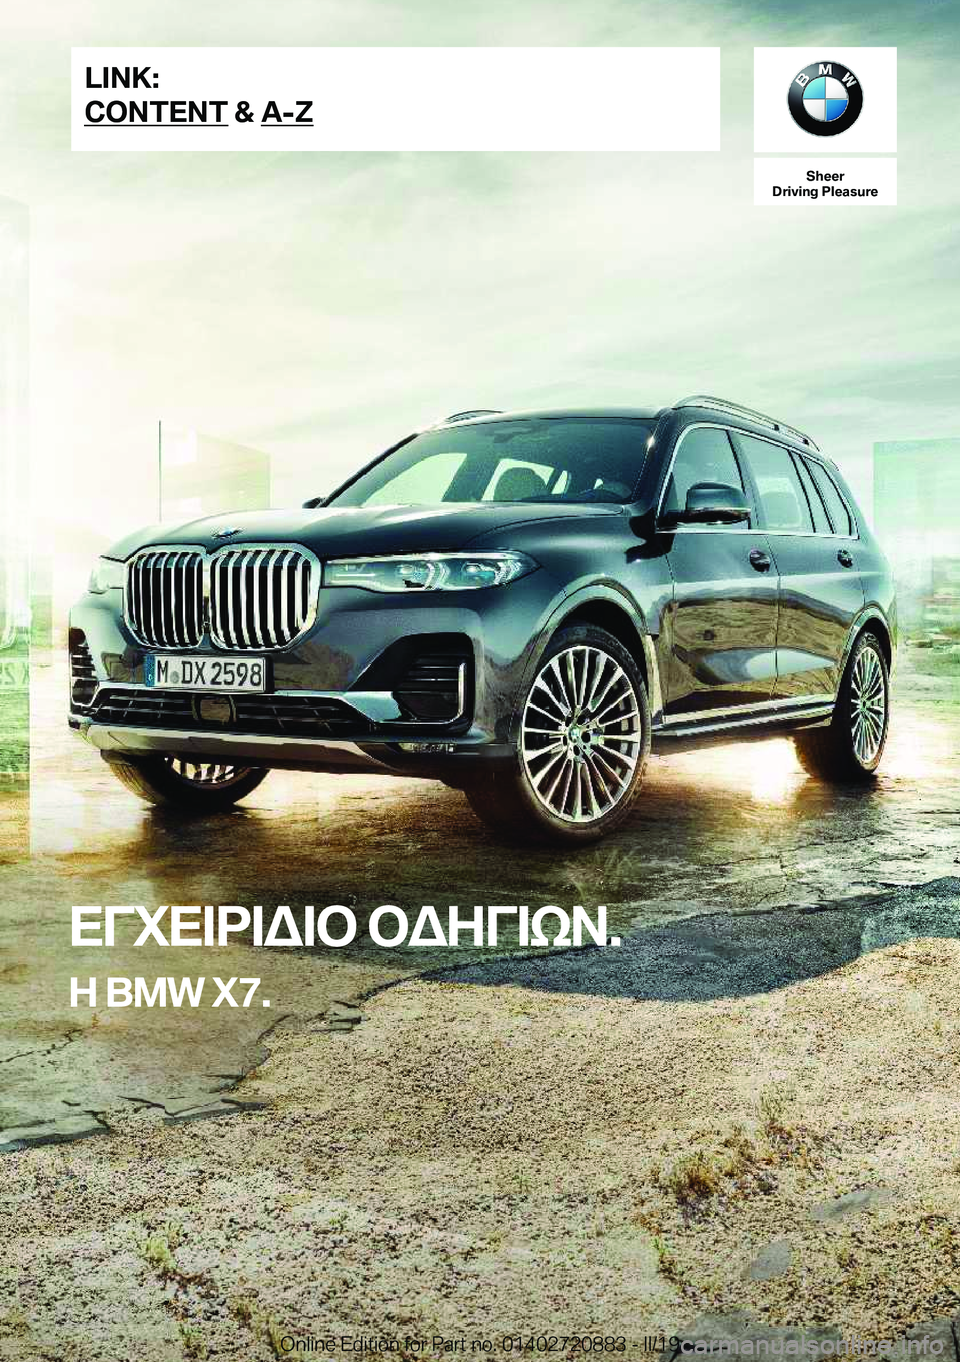 BMW X7 2019  ΟΔΗΓΌΣ ΧΡΉΣΗΣ (in Greek) �S�h�e�e�r
�D�r�i�v�i�n�g��P�l�e�a�s�u�r�e
XViX=d=W=b�bWZV=kA�.
�H��B�M�W��X�7�.�L�I�N�K�:
�C�O�N�T�E�N�T��&��A�-�Z�O�n�l�i�n�e��E�d�i�t�i�o�n��f�o�r��P�a�r�t��n�o�.��0�1�4